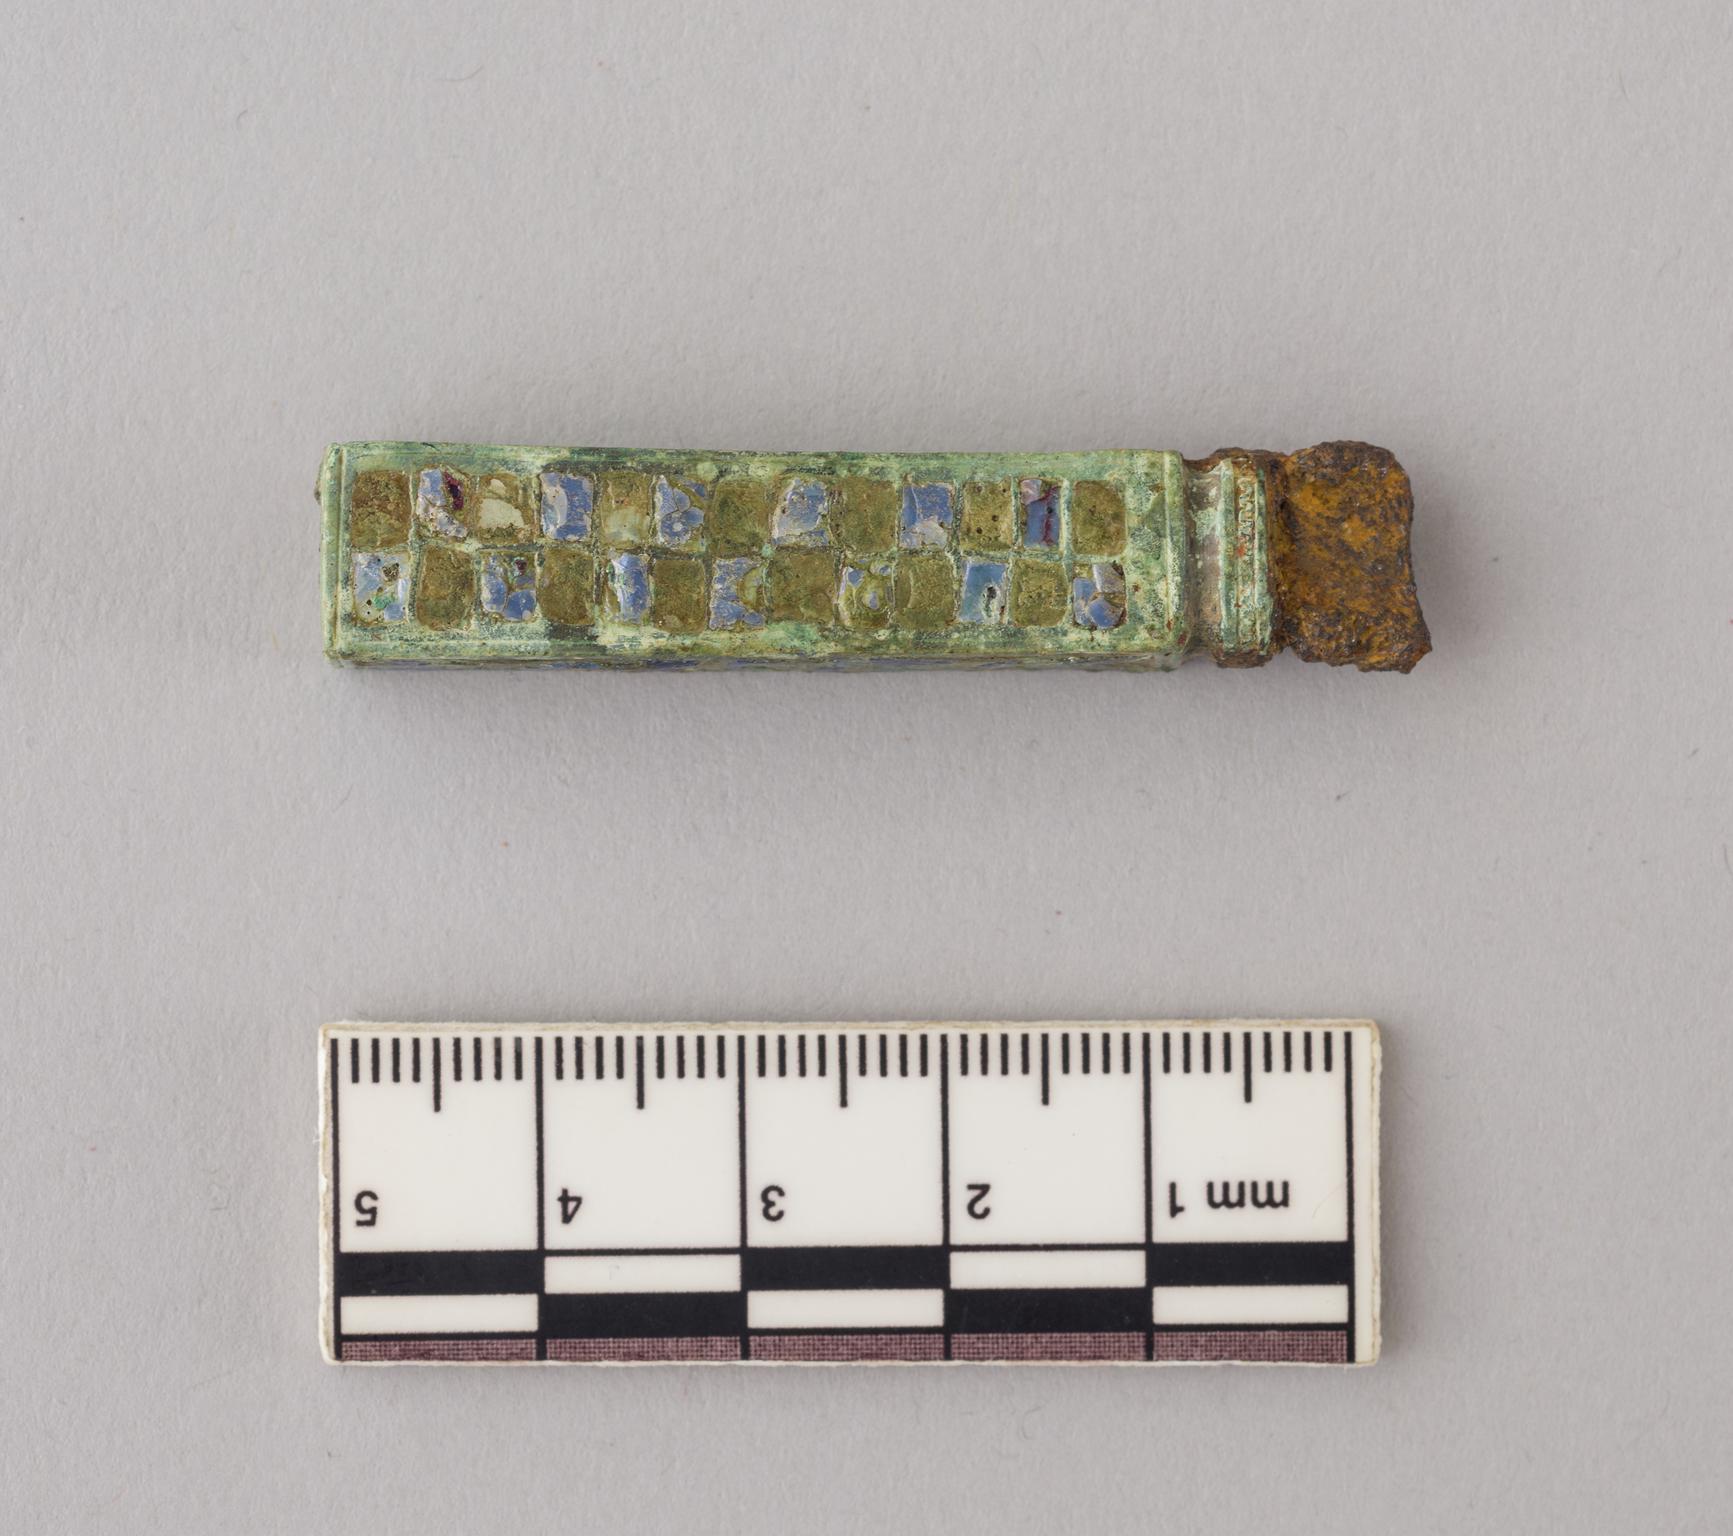 Roman copper alloy knife handle